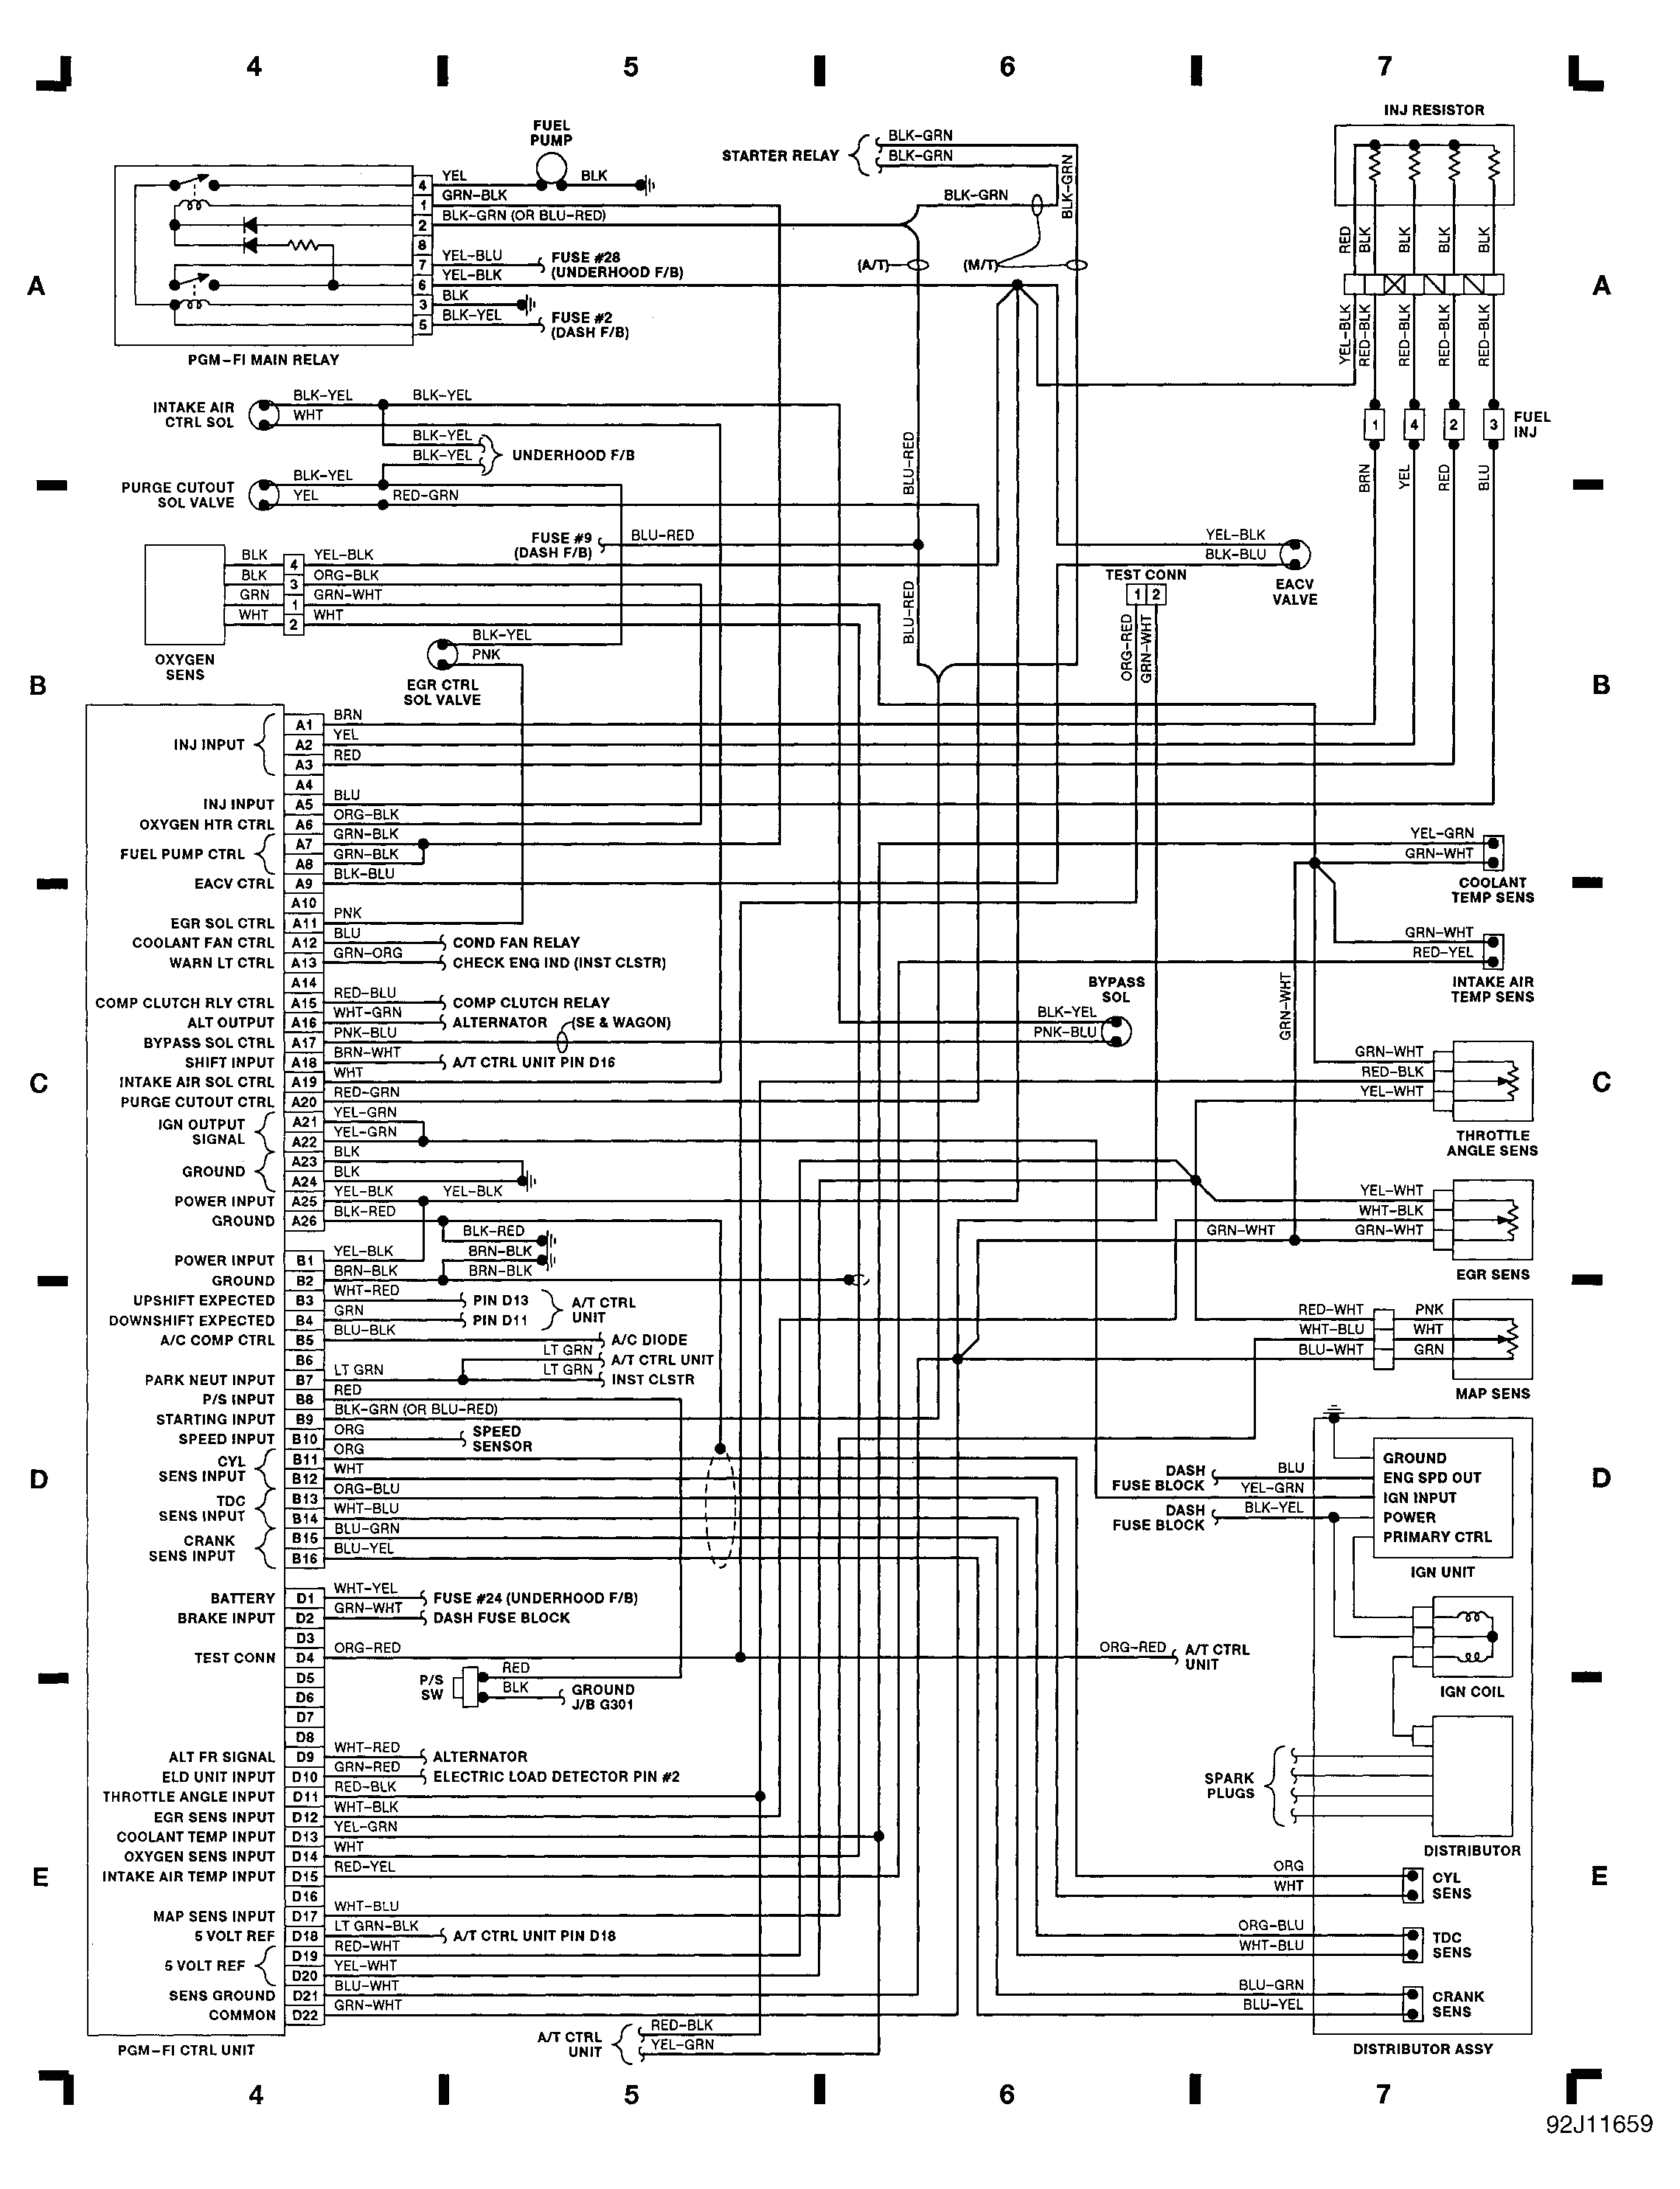 1994 honda accord wiring harness schematic manual wiring diagram 1994 honda cbr900rr wiring diagram 1994 honda